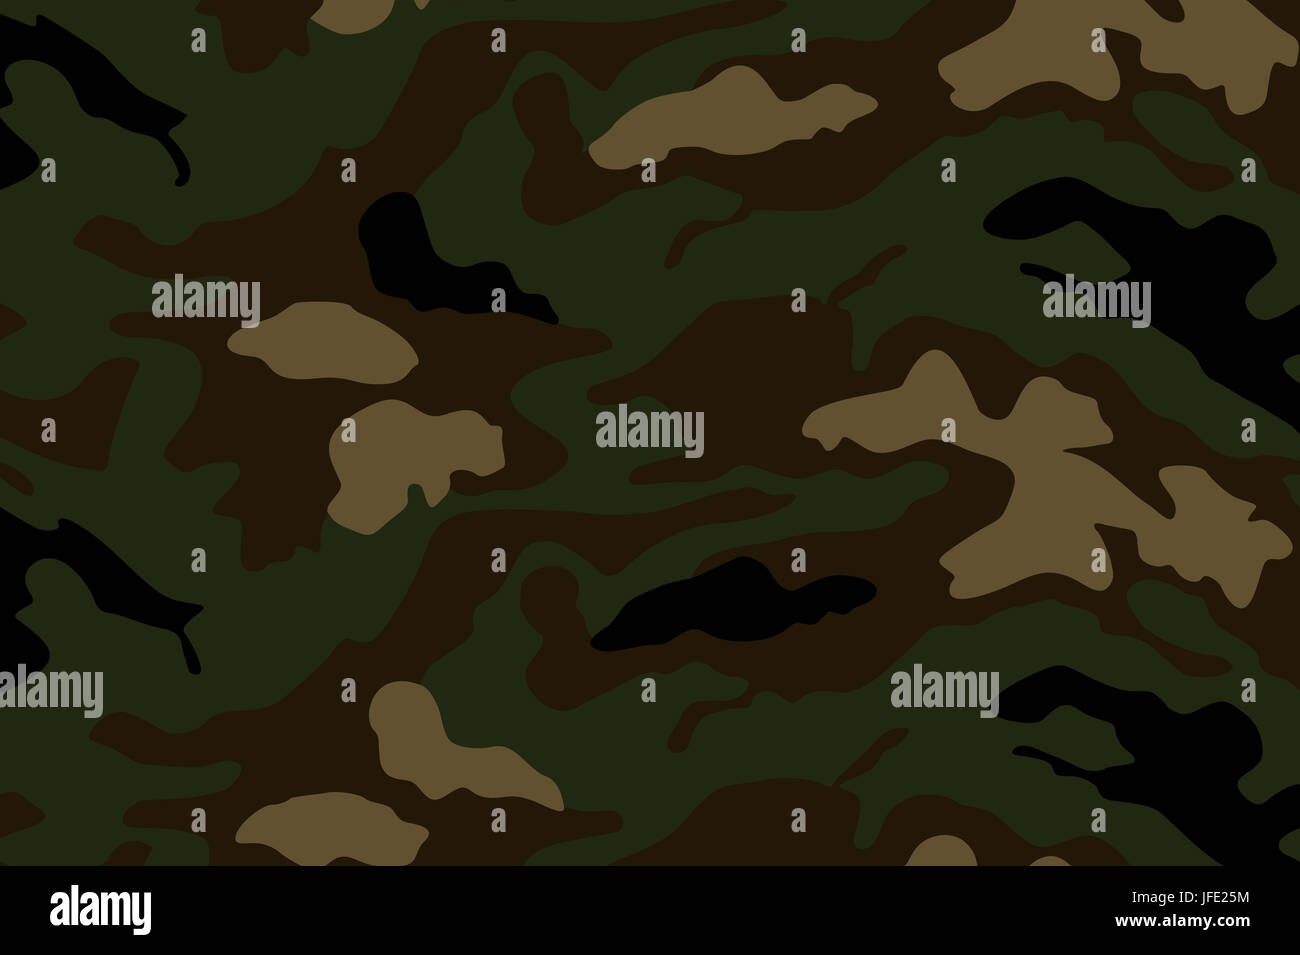 Militari pattern camouflage Foto stock - Alamy